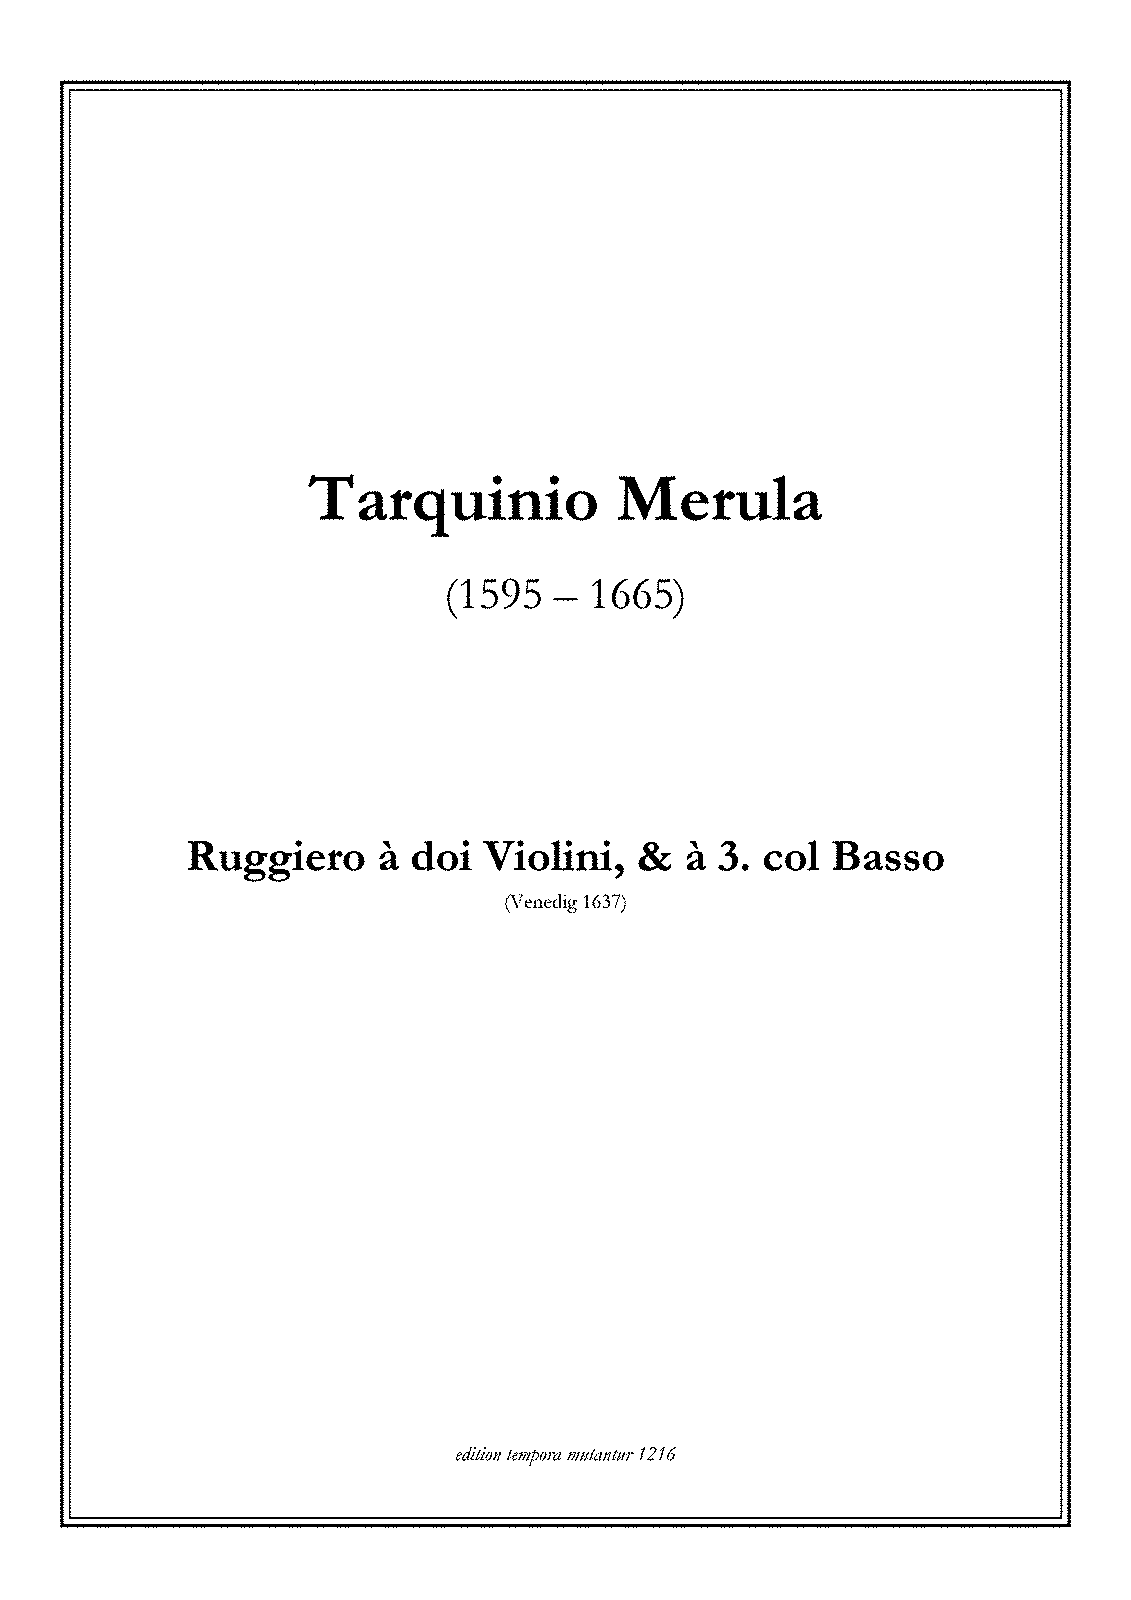 Ruggiero, Op.12 No.18 (Merula, Tarquinio) - IMSLP